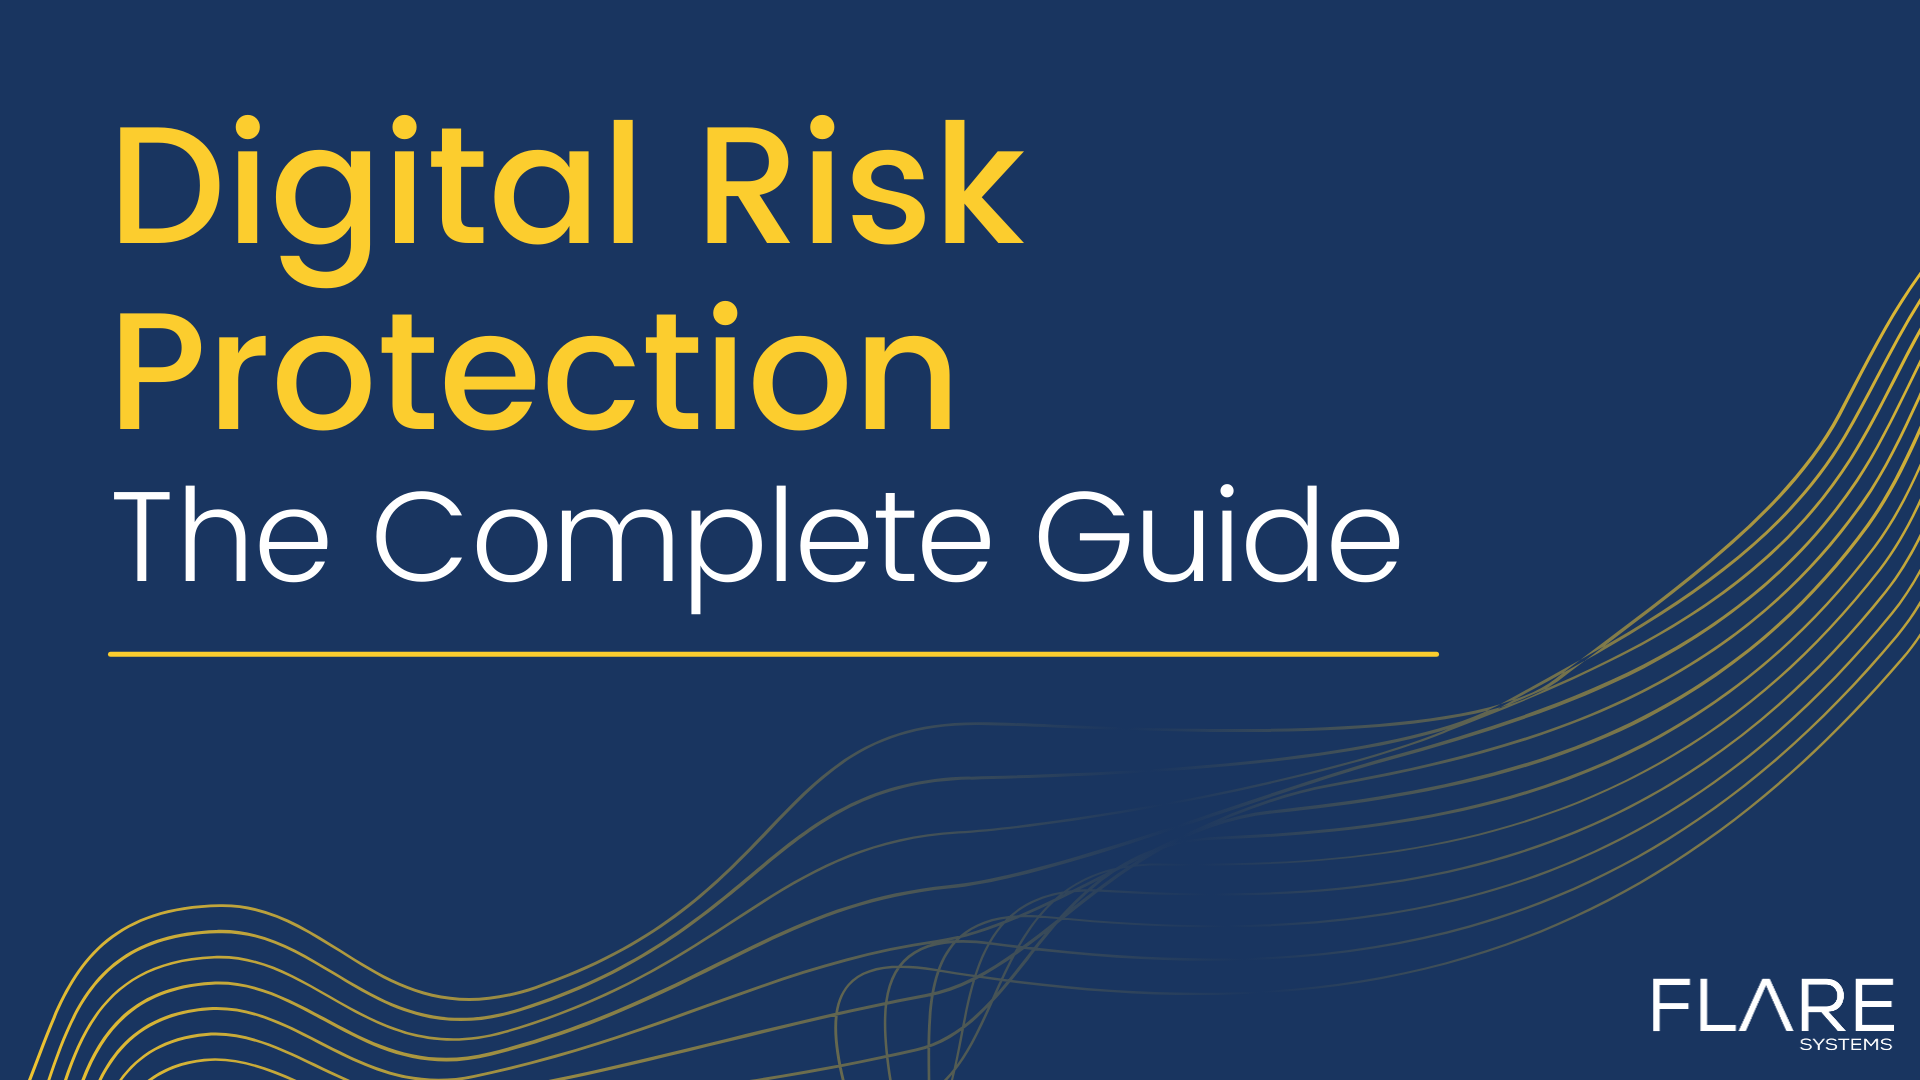 Digital Risk Protection Guide